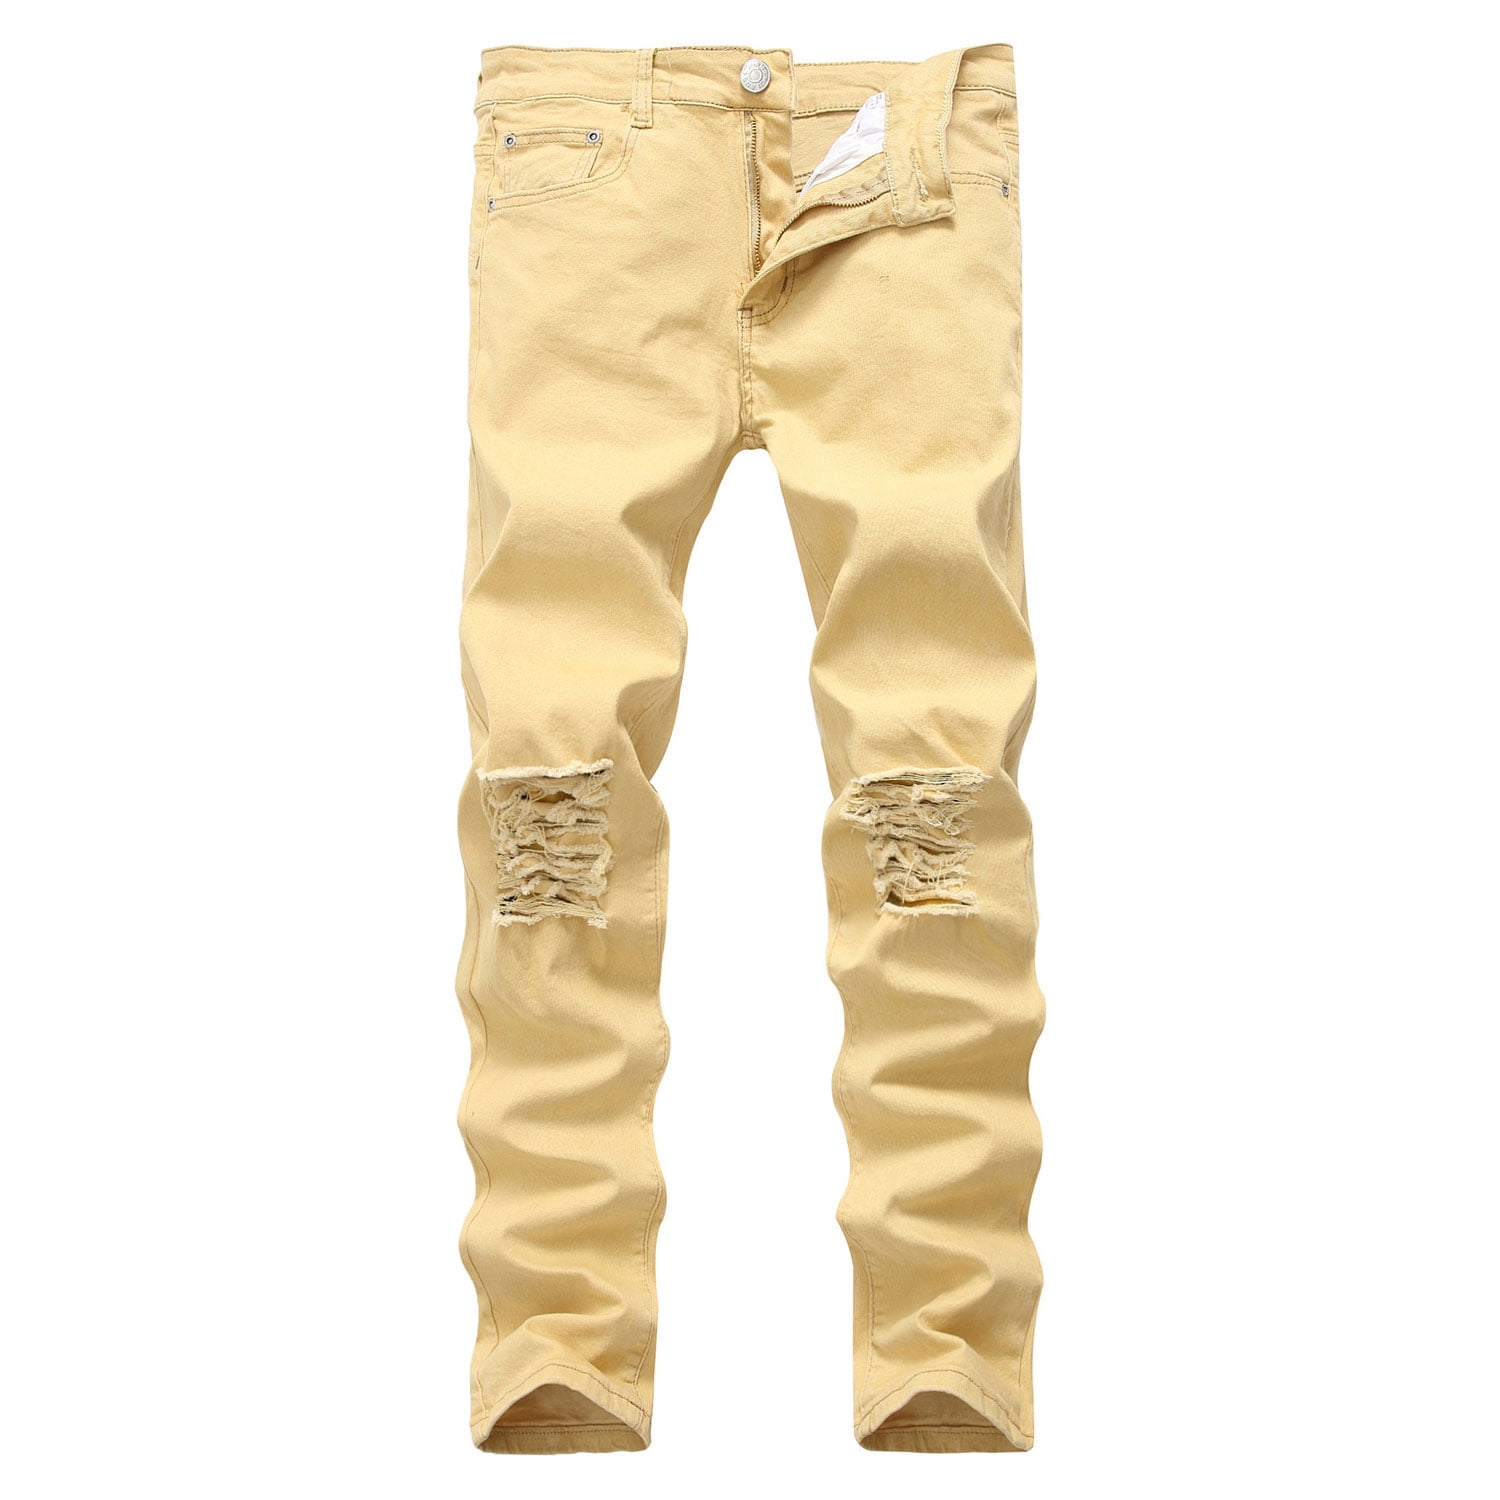 Previn Jeans Stretch Distressed Destroyed Leg Skinny Demin Pants Khaki 34W x 32L - Walmart.com